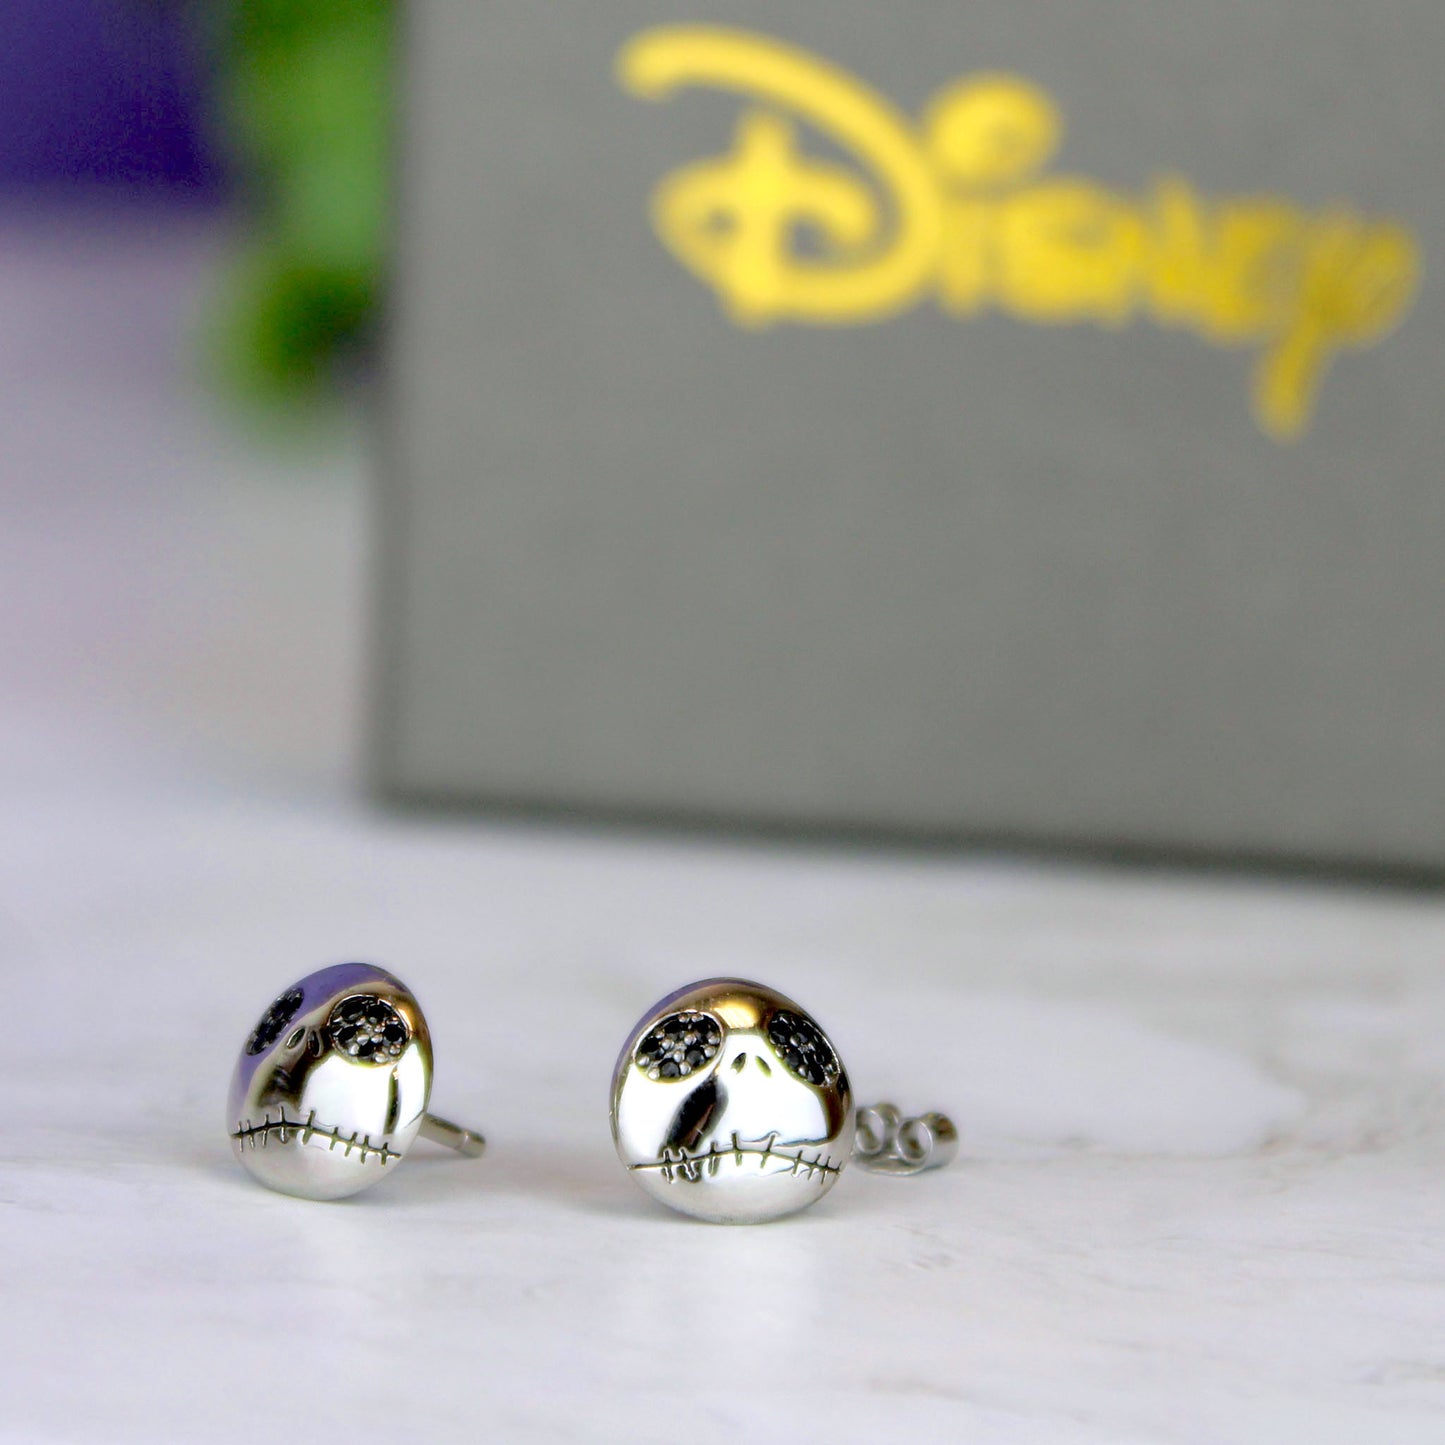 Jack Skellington (The Nightmare Before Christmas) Disney Gold Plated Crystal Stud Earrings